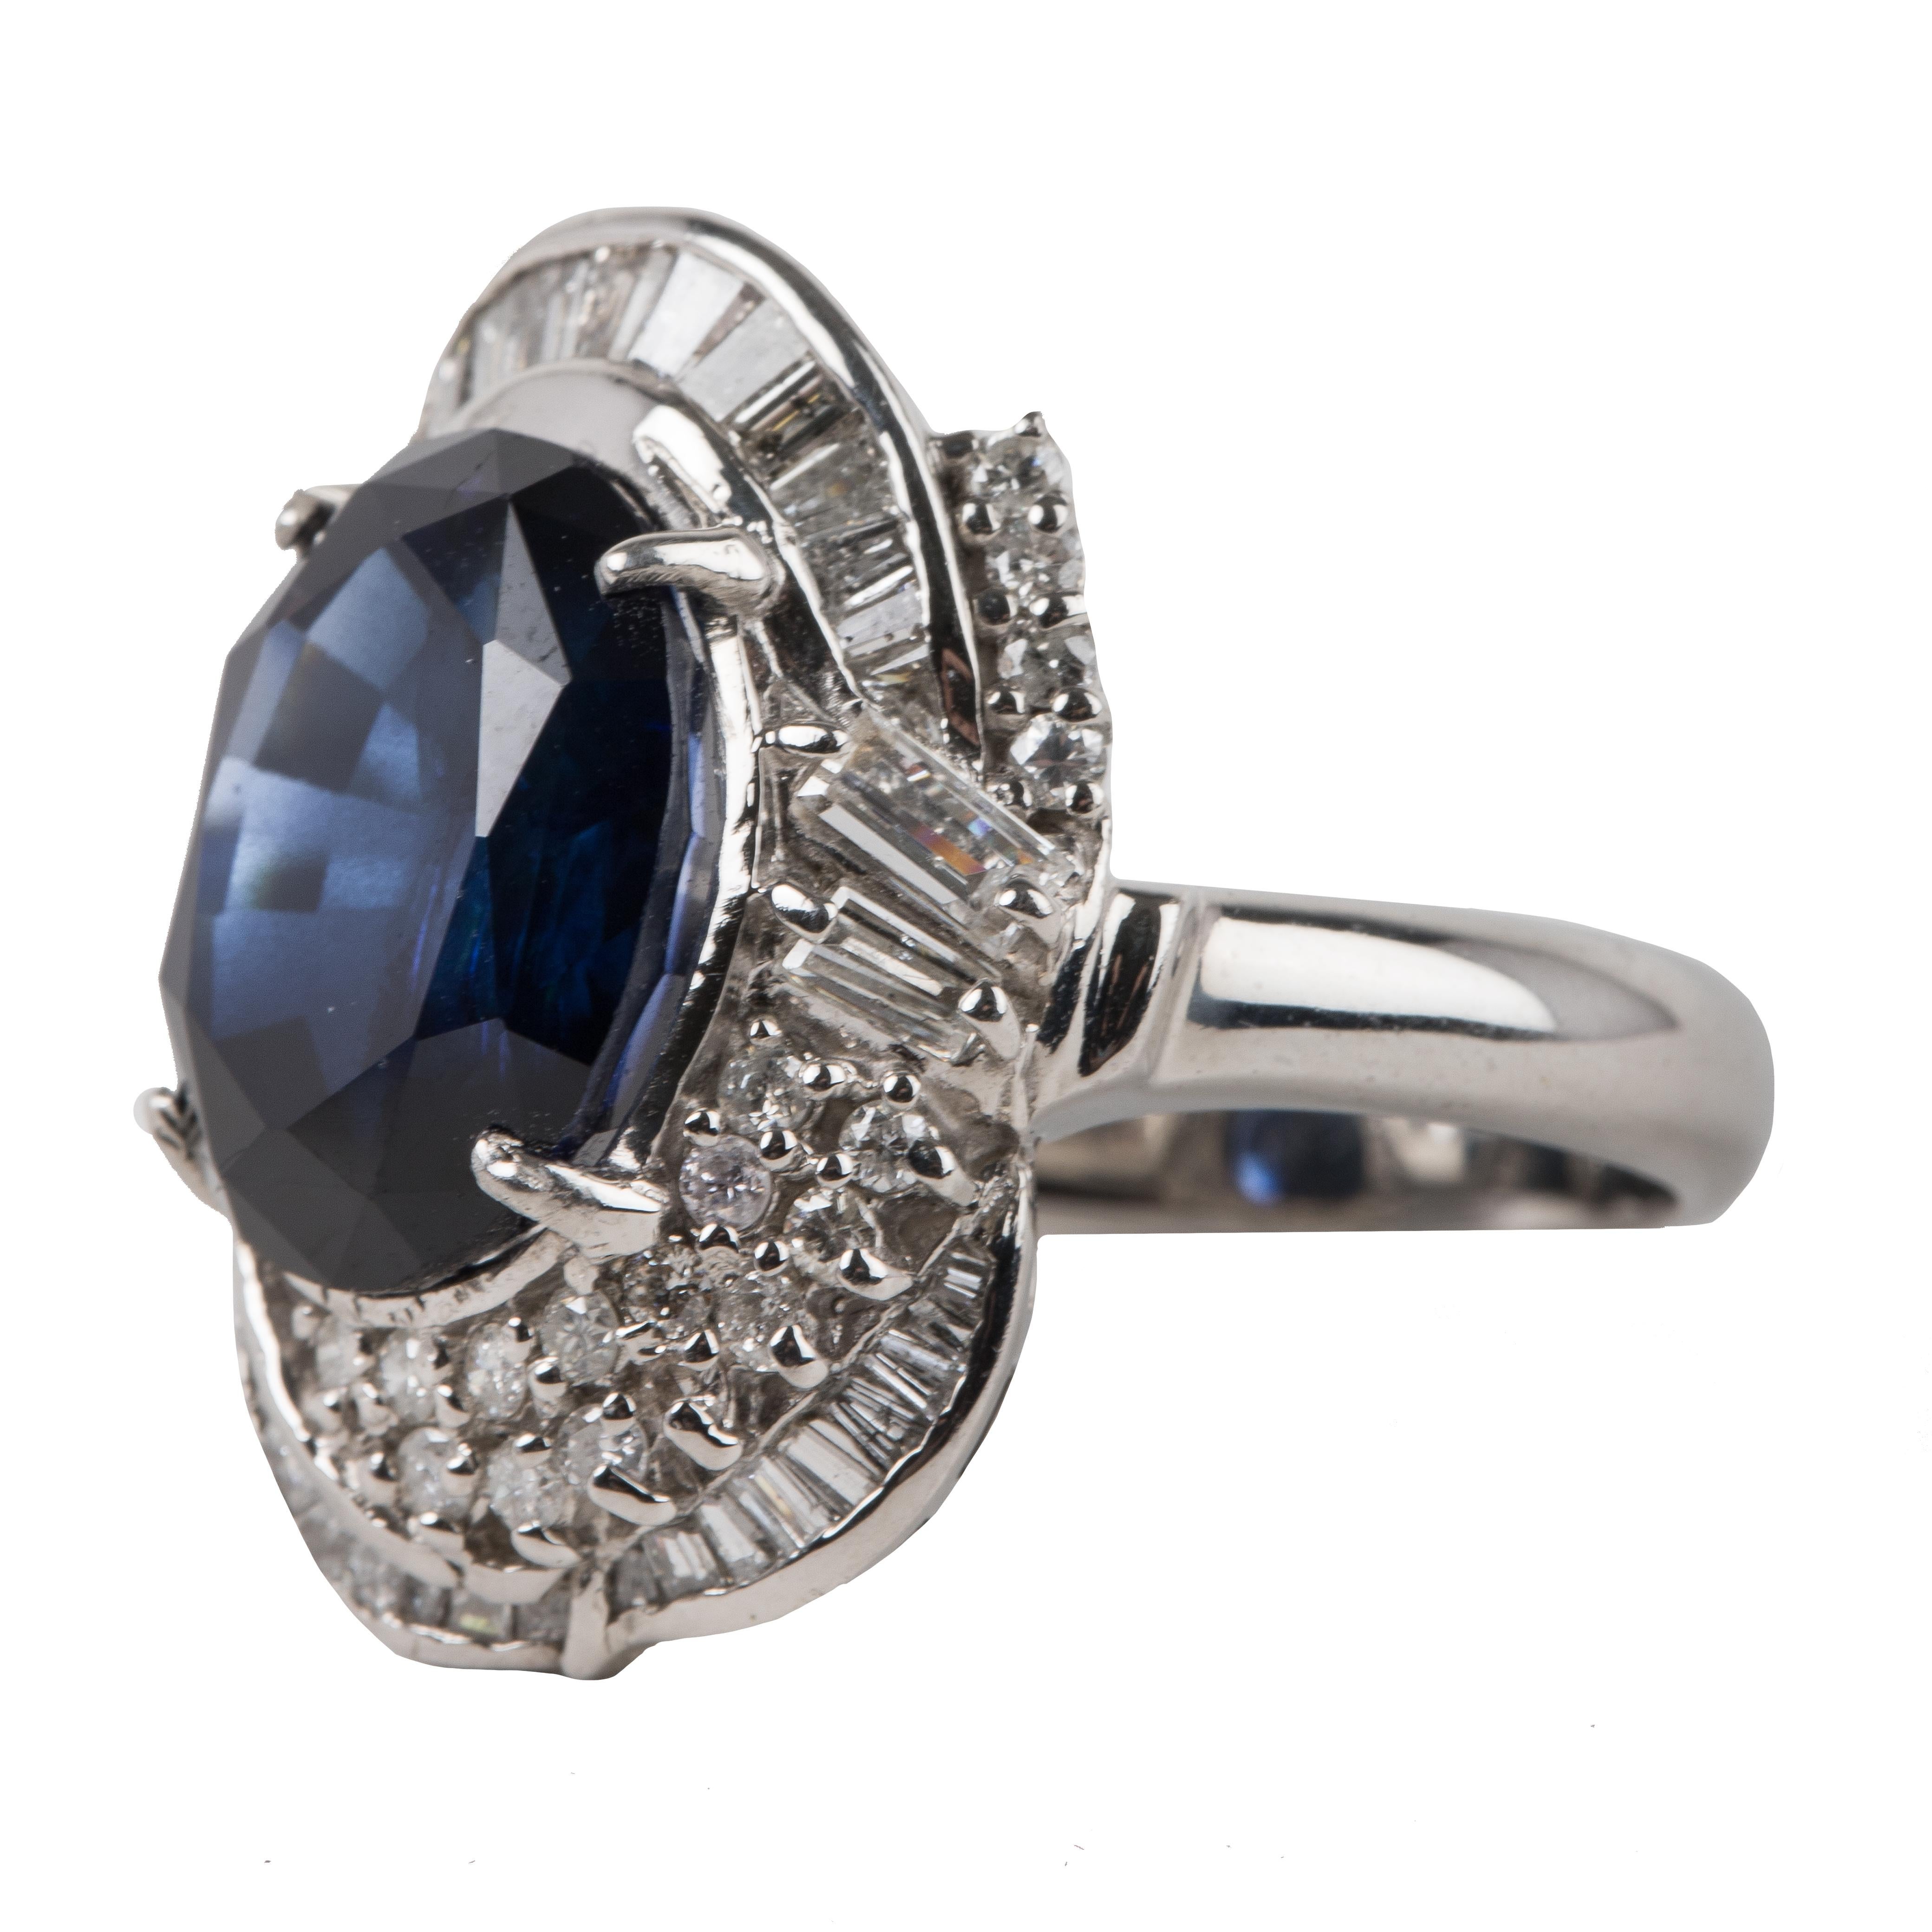 Oval Cut Sapphire - appx 9 carats
Round cut and baguette diamond halo surrounding beautiful sapphire stone
